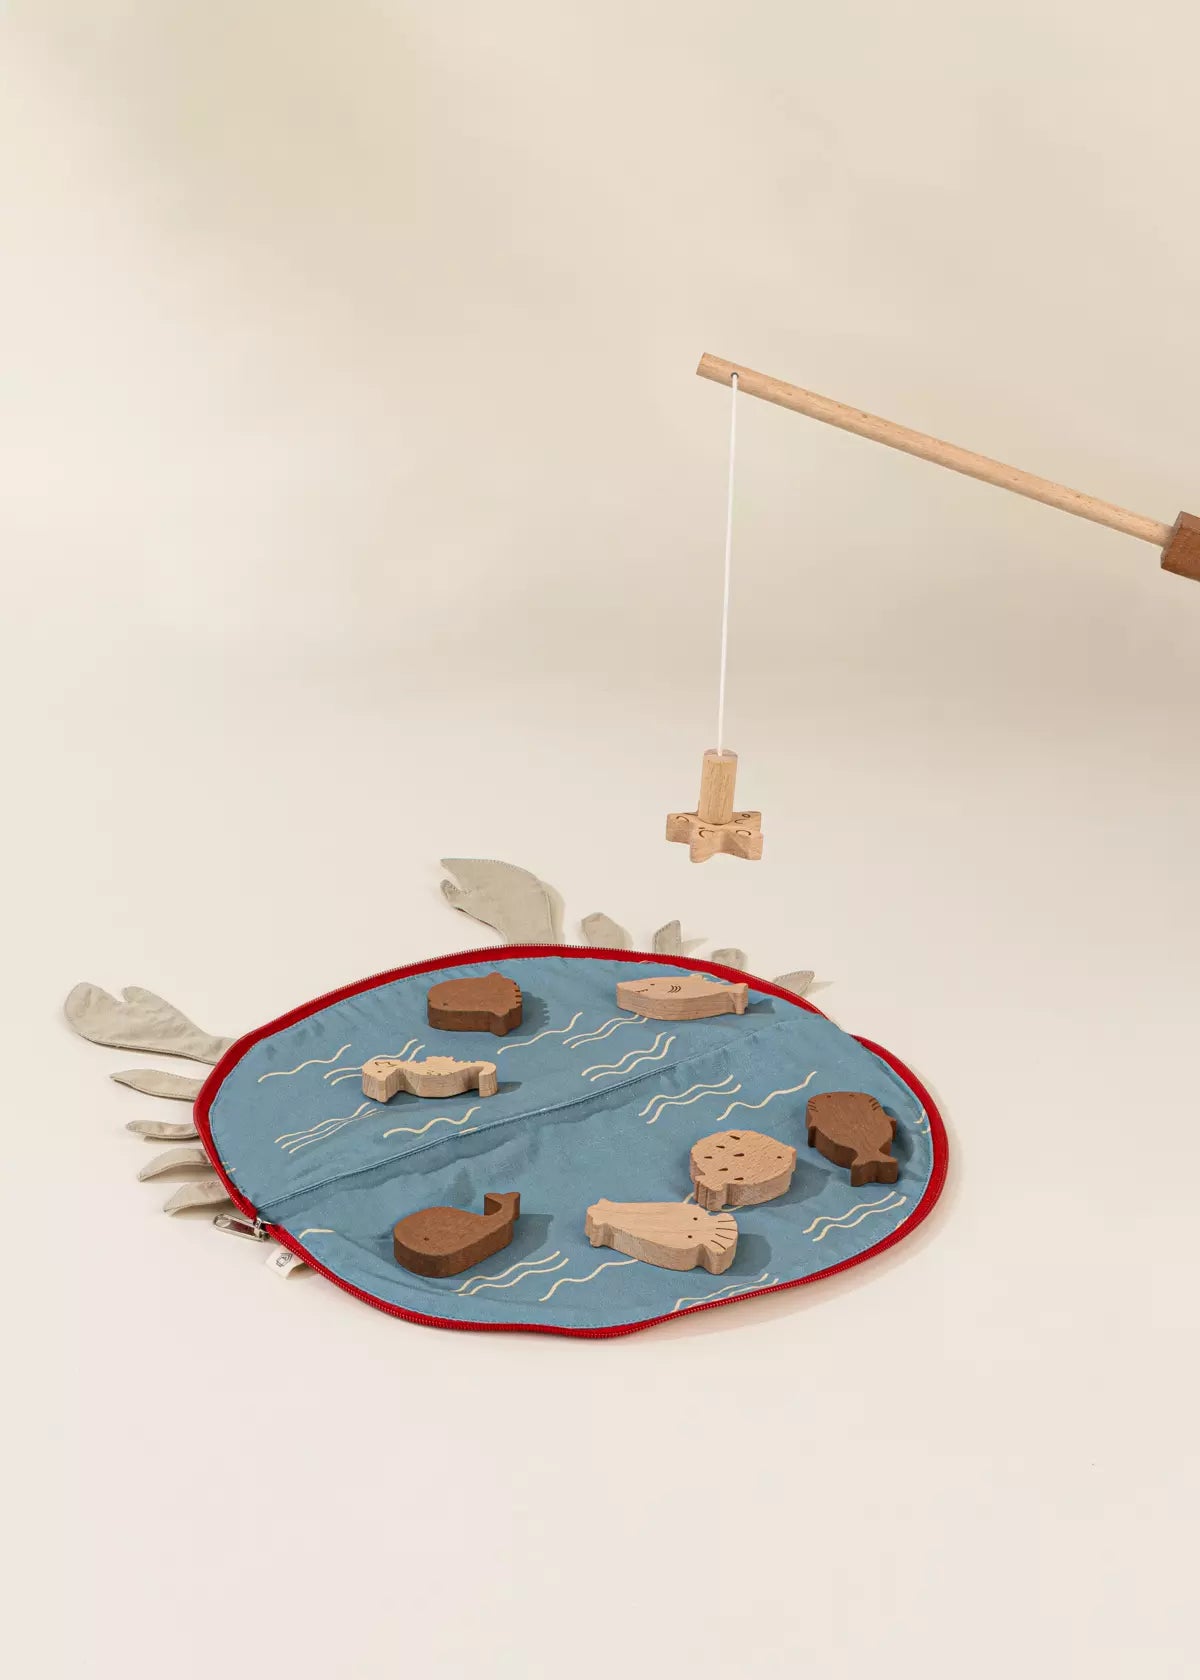 Craftycrocodile Miniature Fishing Pole with Fish